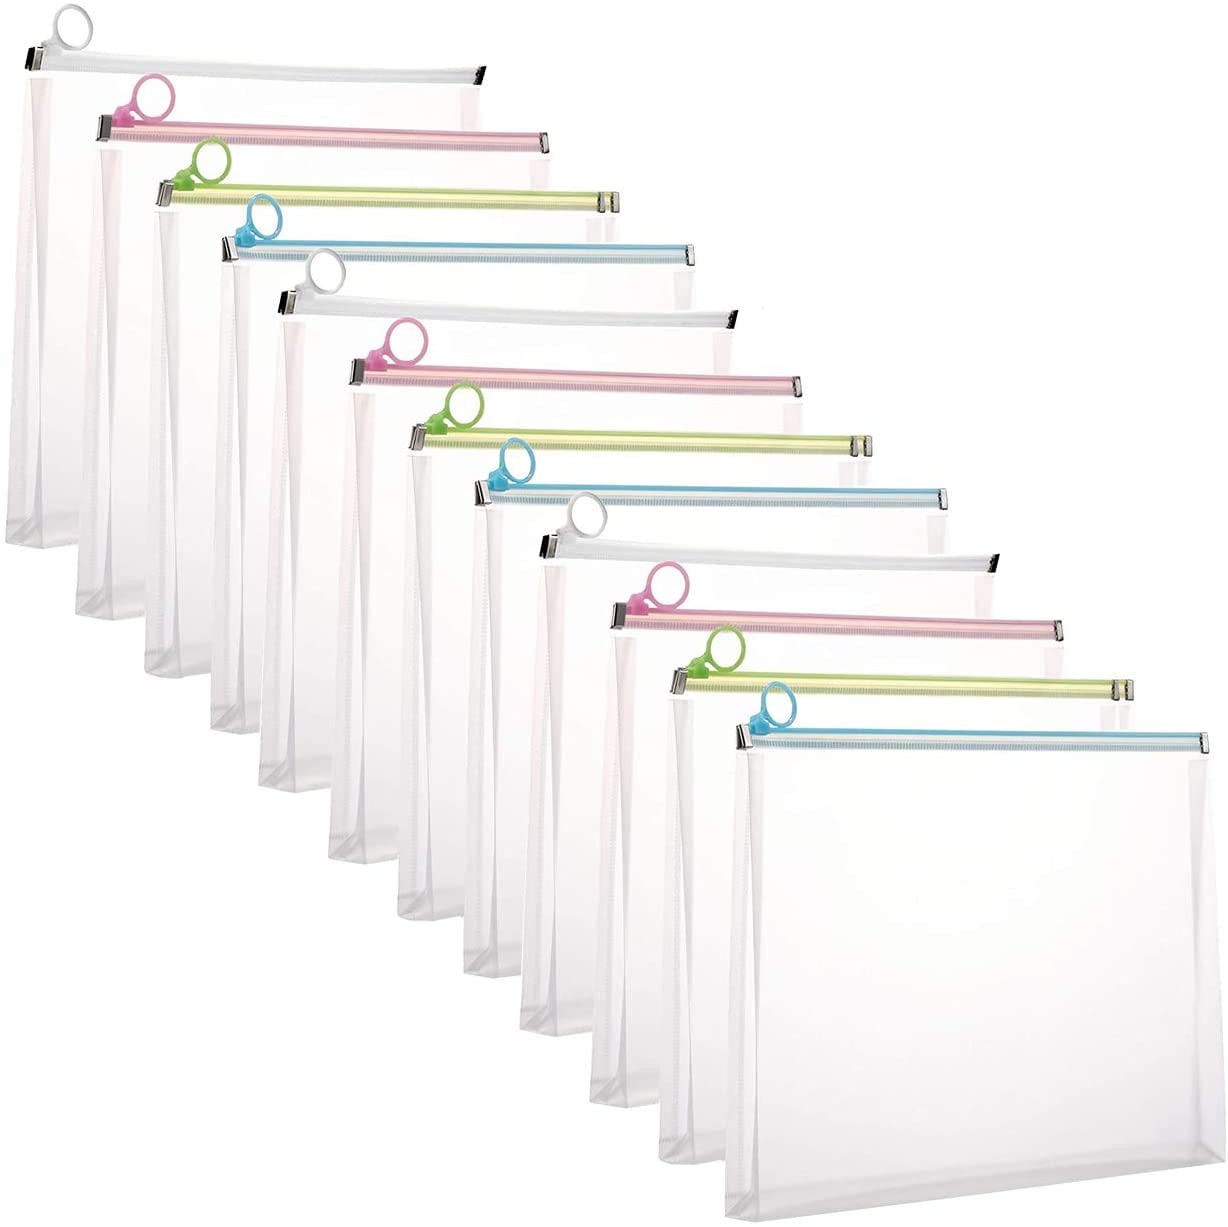 24pcs HOT A4 Polypropylene Document Folder Bags Clear File Envelope Bags 